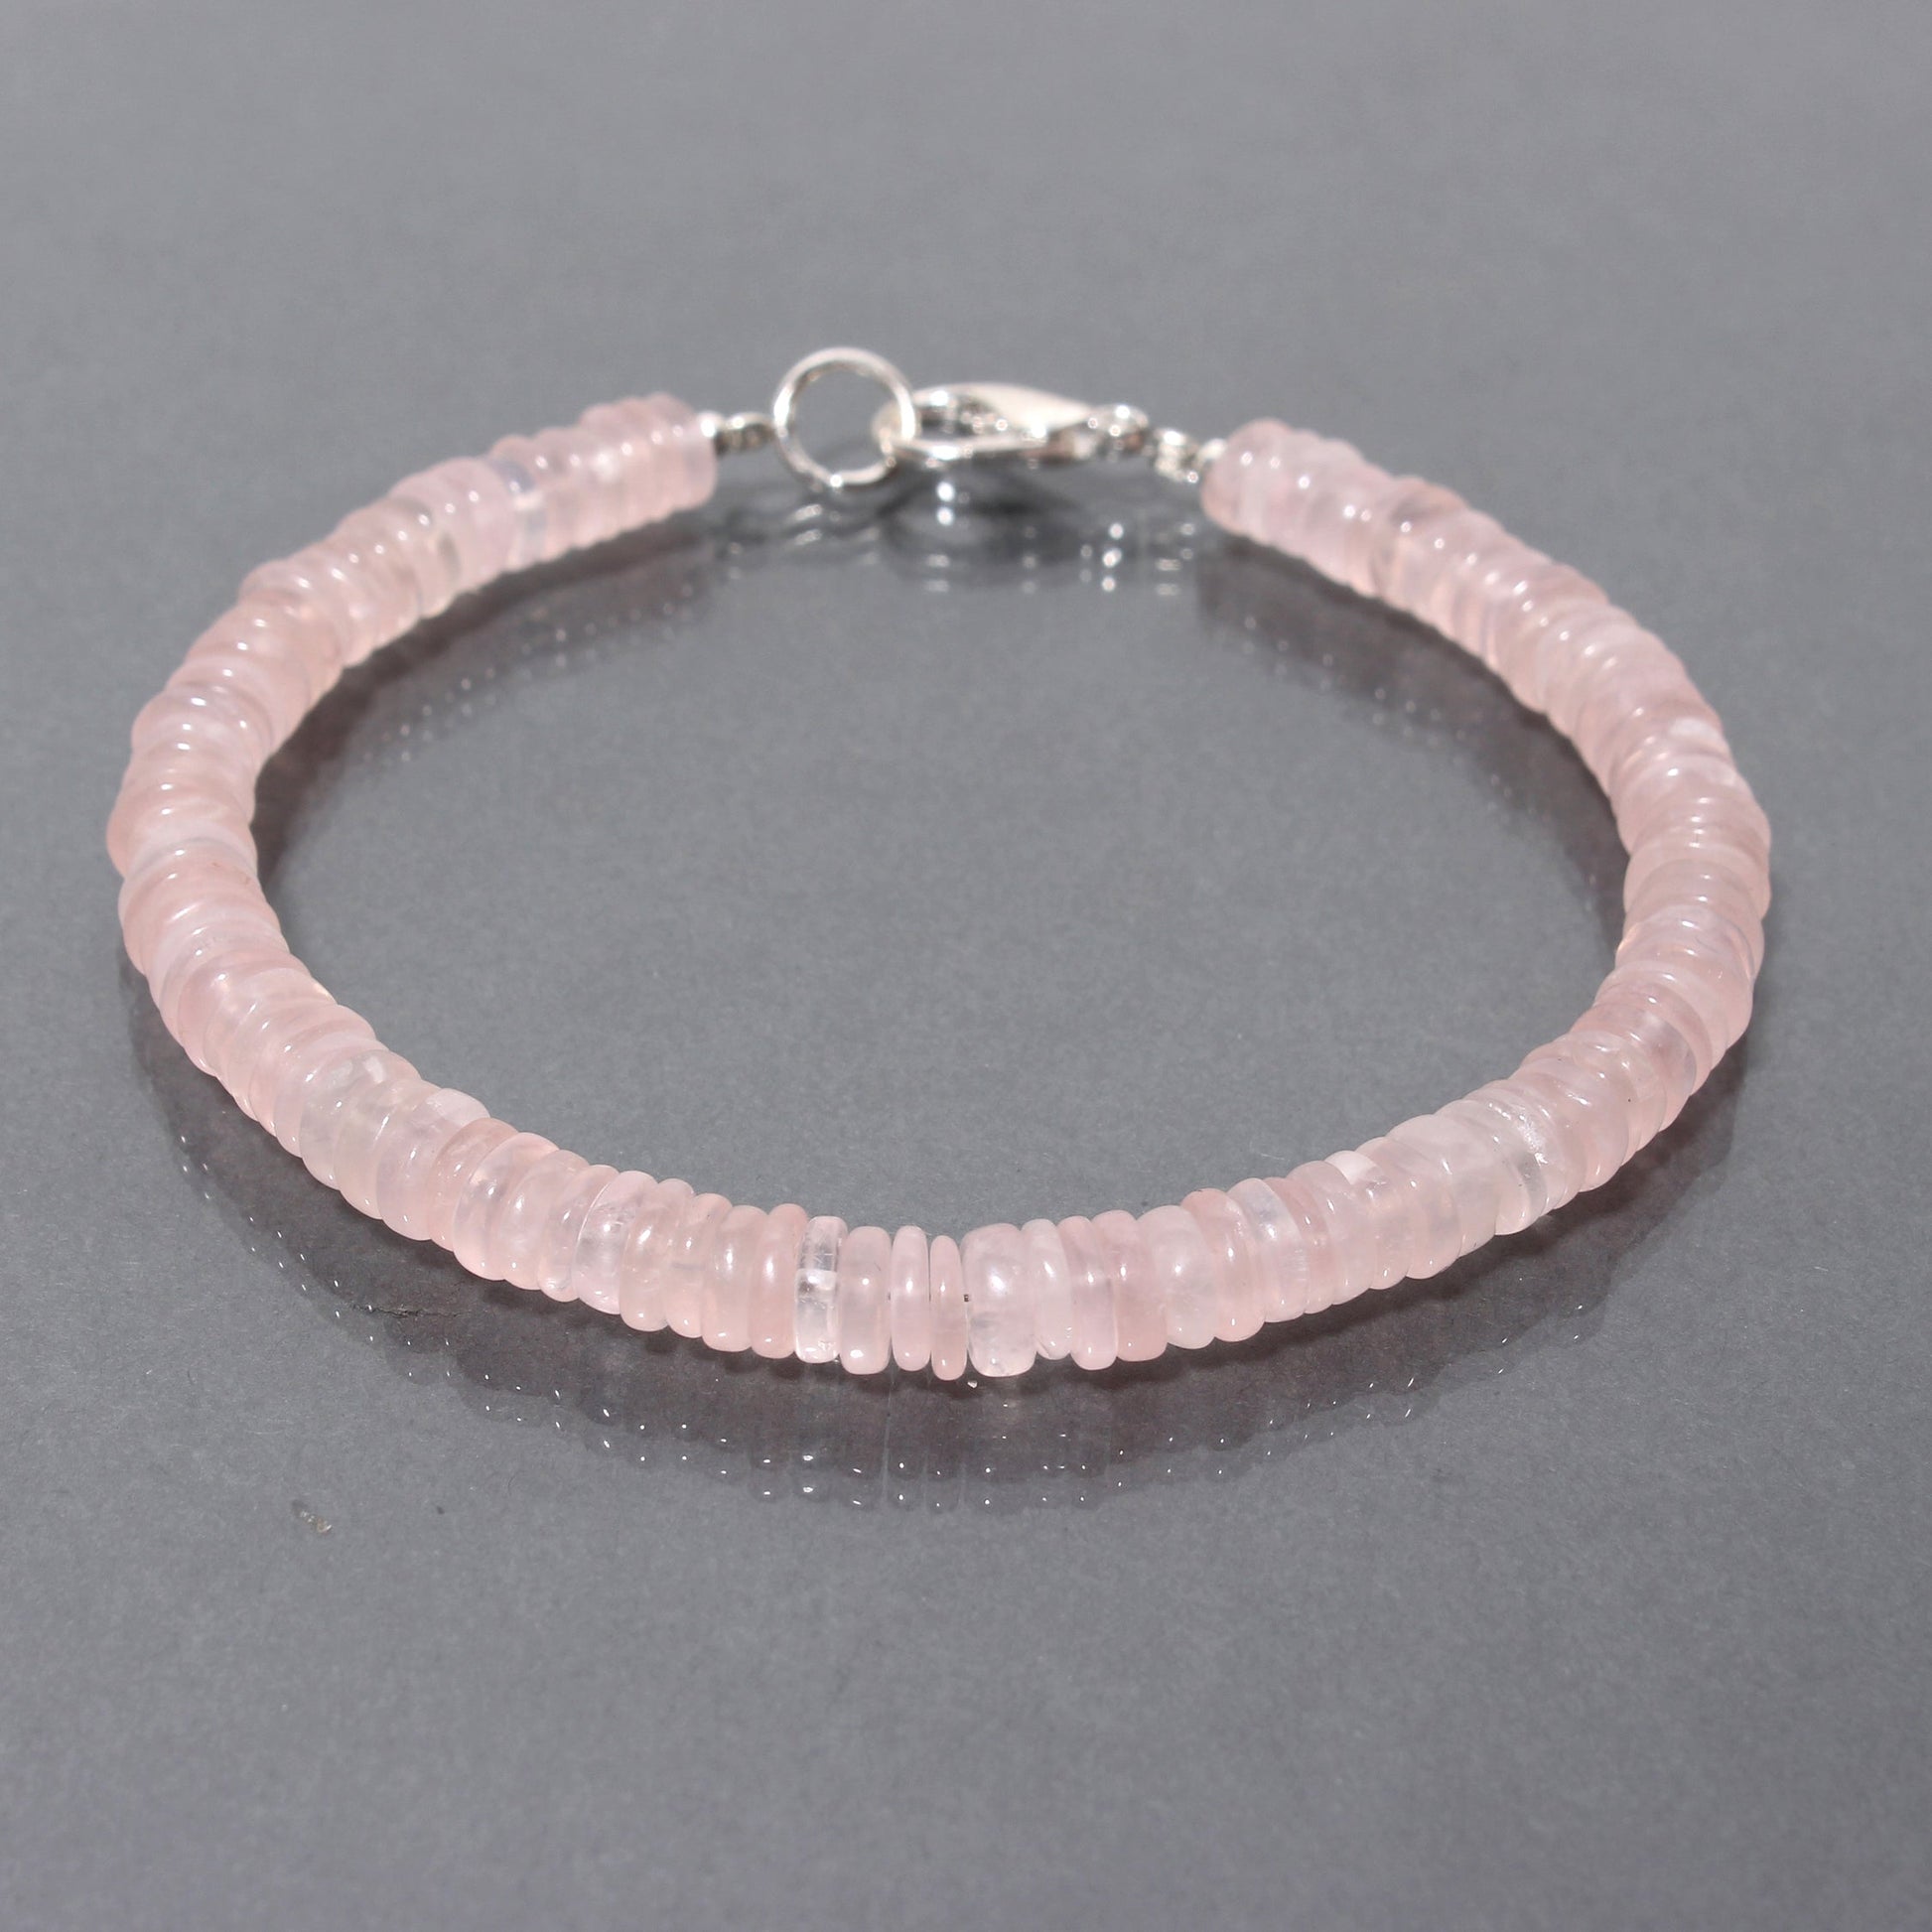 Captivating Rose Quartz Heishi Bracelet with 925 Silver Lock - A Jewelry Box Essential! GemsRush